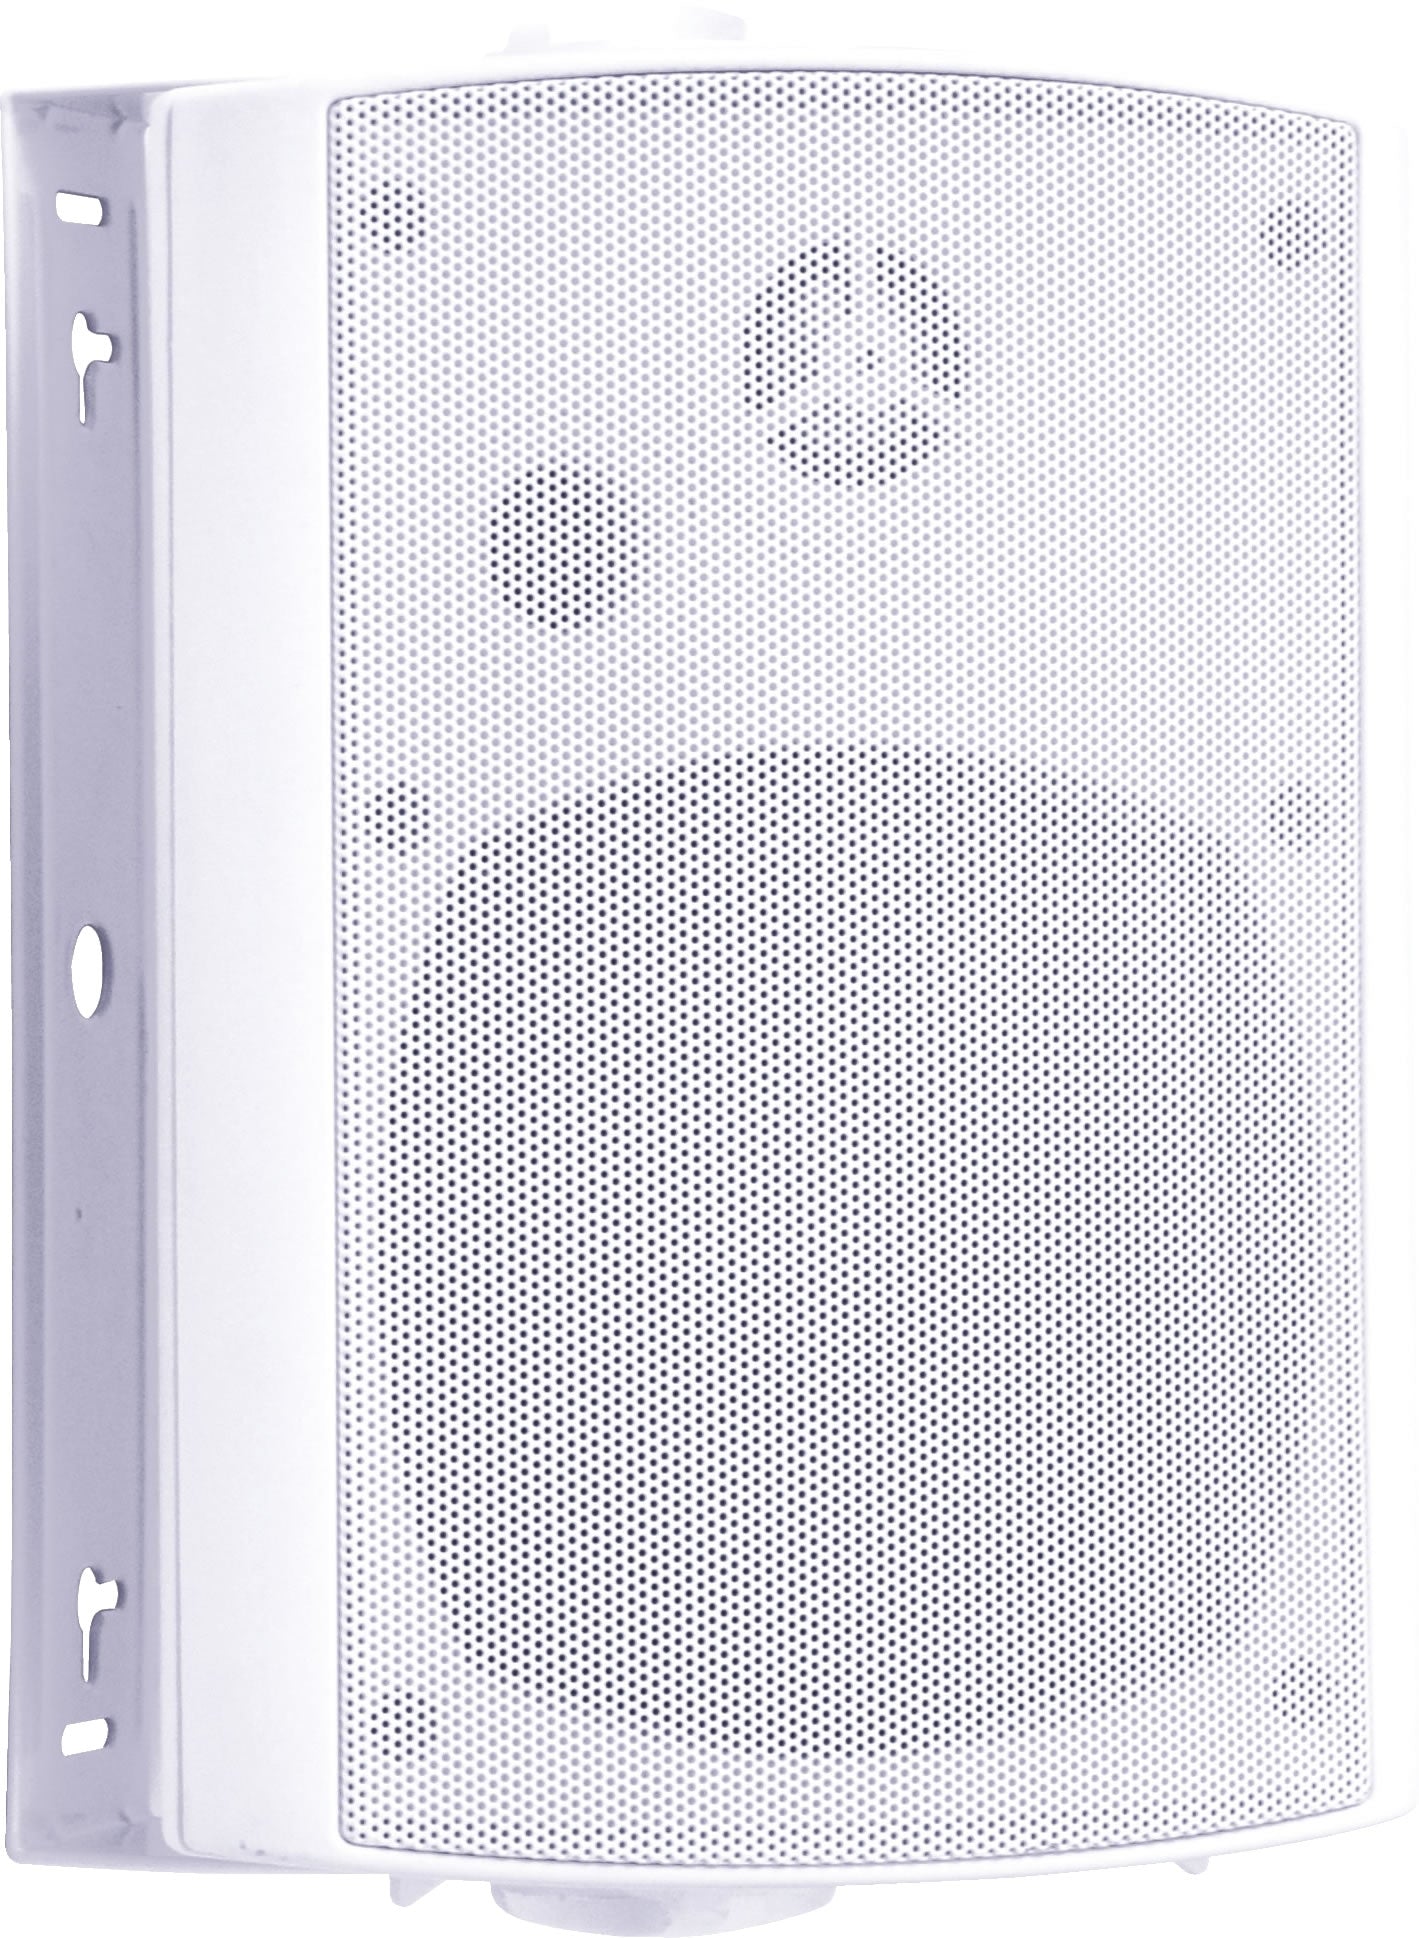 89-8405W 5.25" 2-Way Mini Box Speaker with Poly Tweeter - White